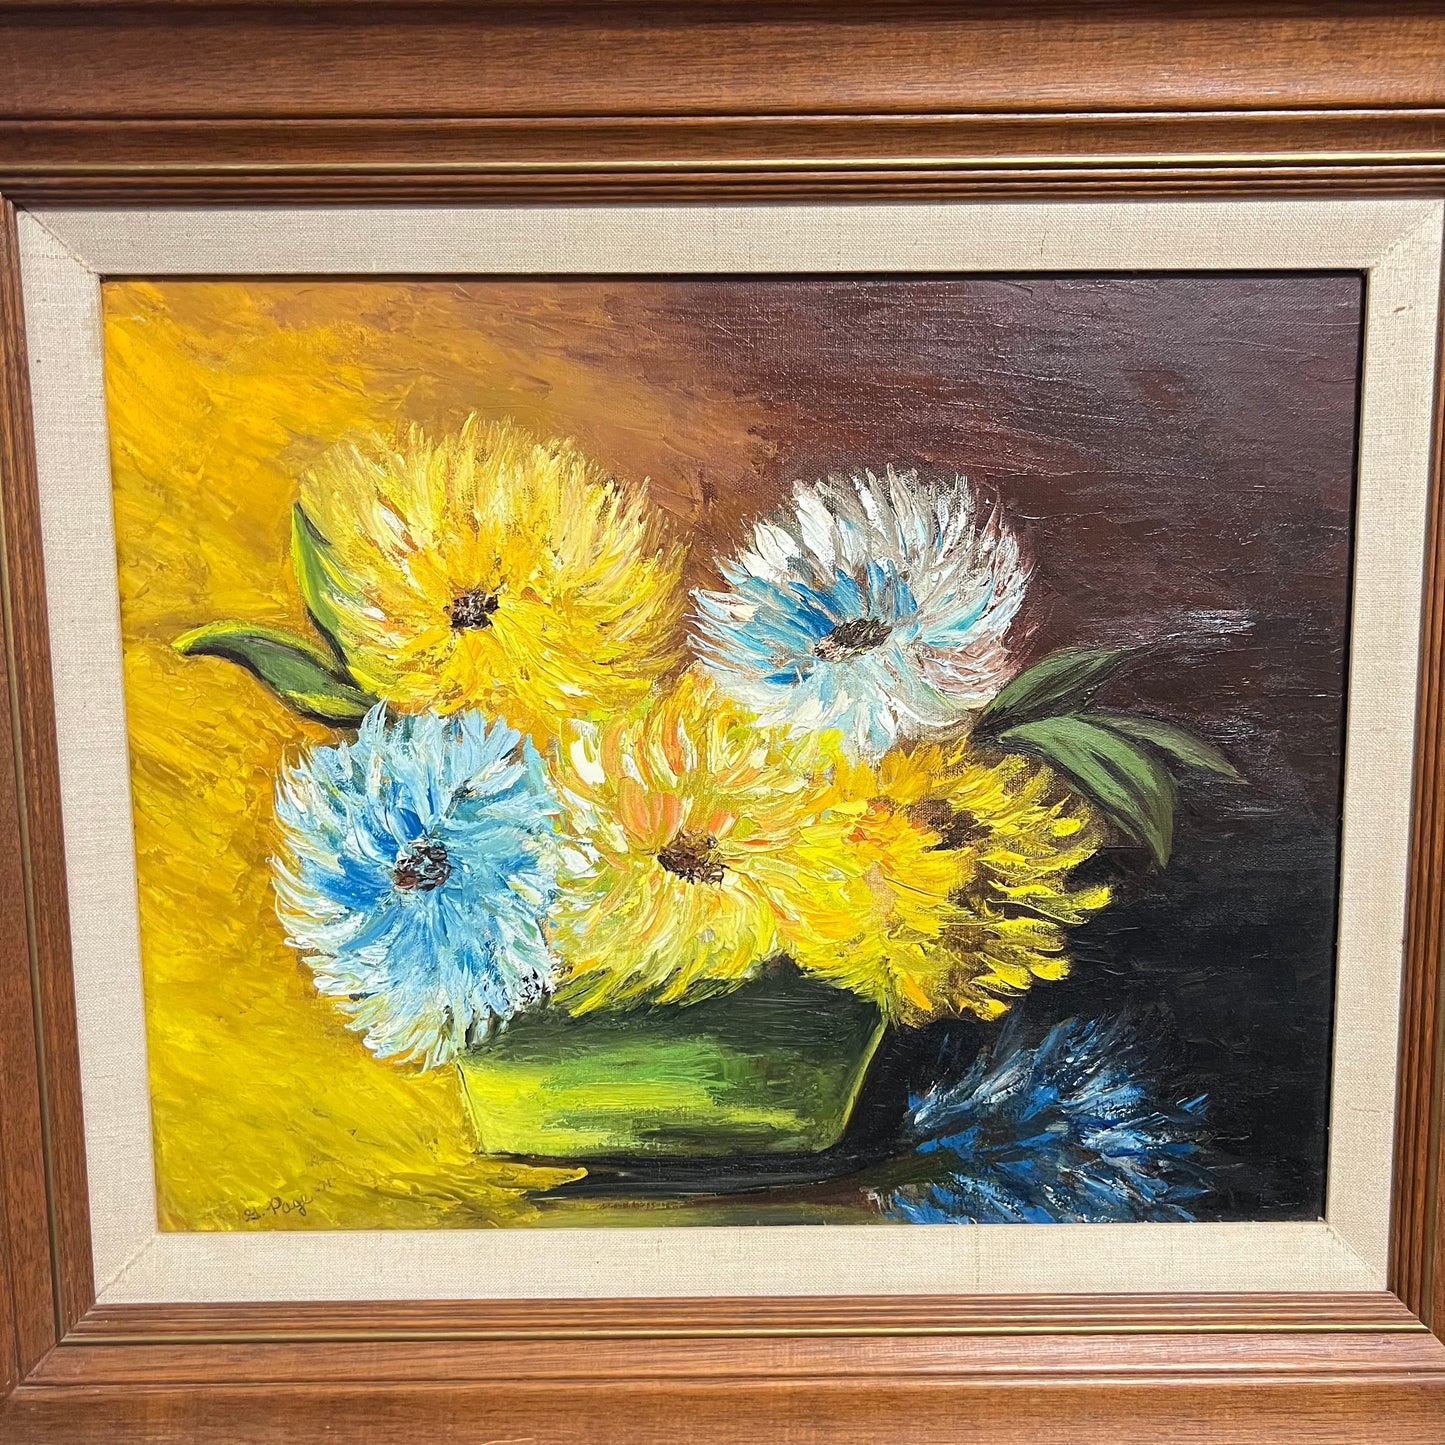 Original Signed Art Painting Oil on Canvas Floral Framed 27x23**